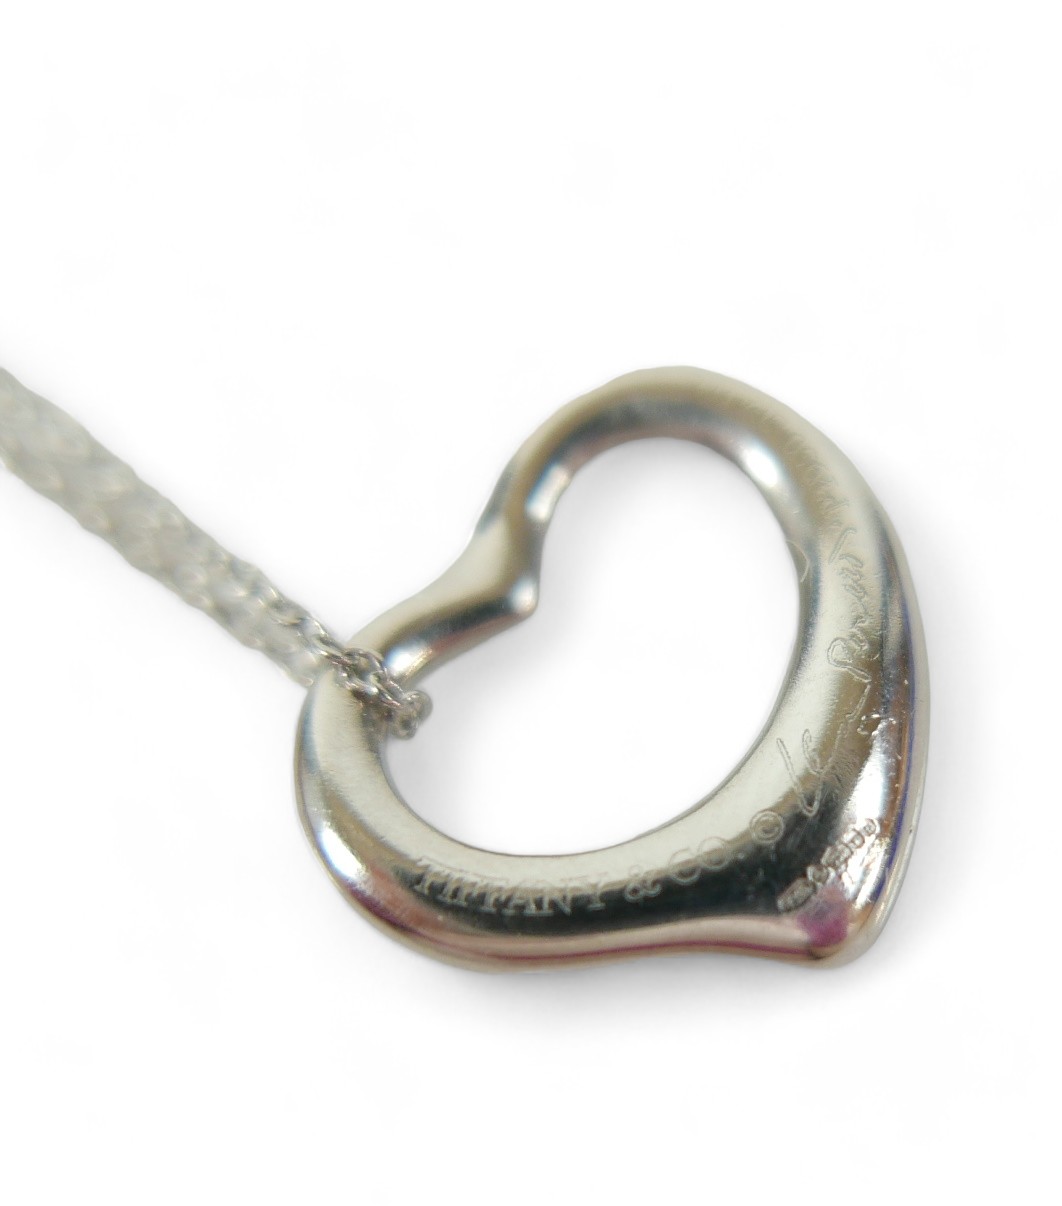 A Tiffany & Co 950 platinium Peretti heart pendant and chain, total 5.4 grams, 45cm chain. - Image 3 of 6